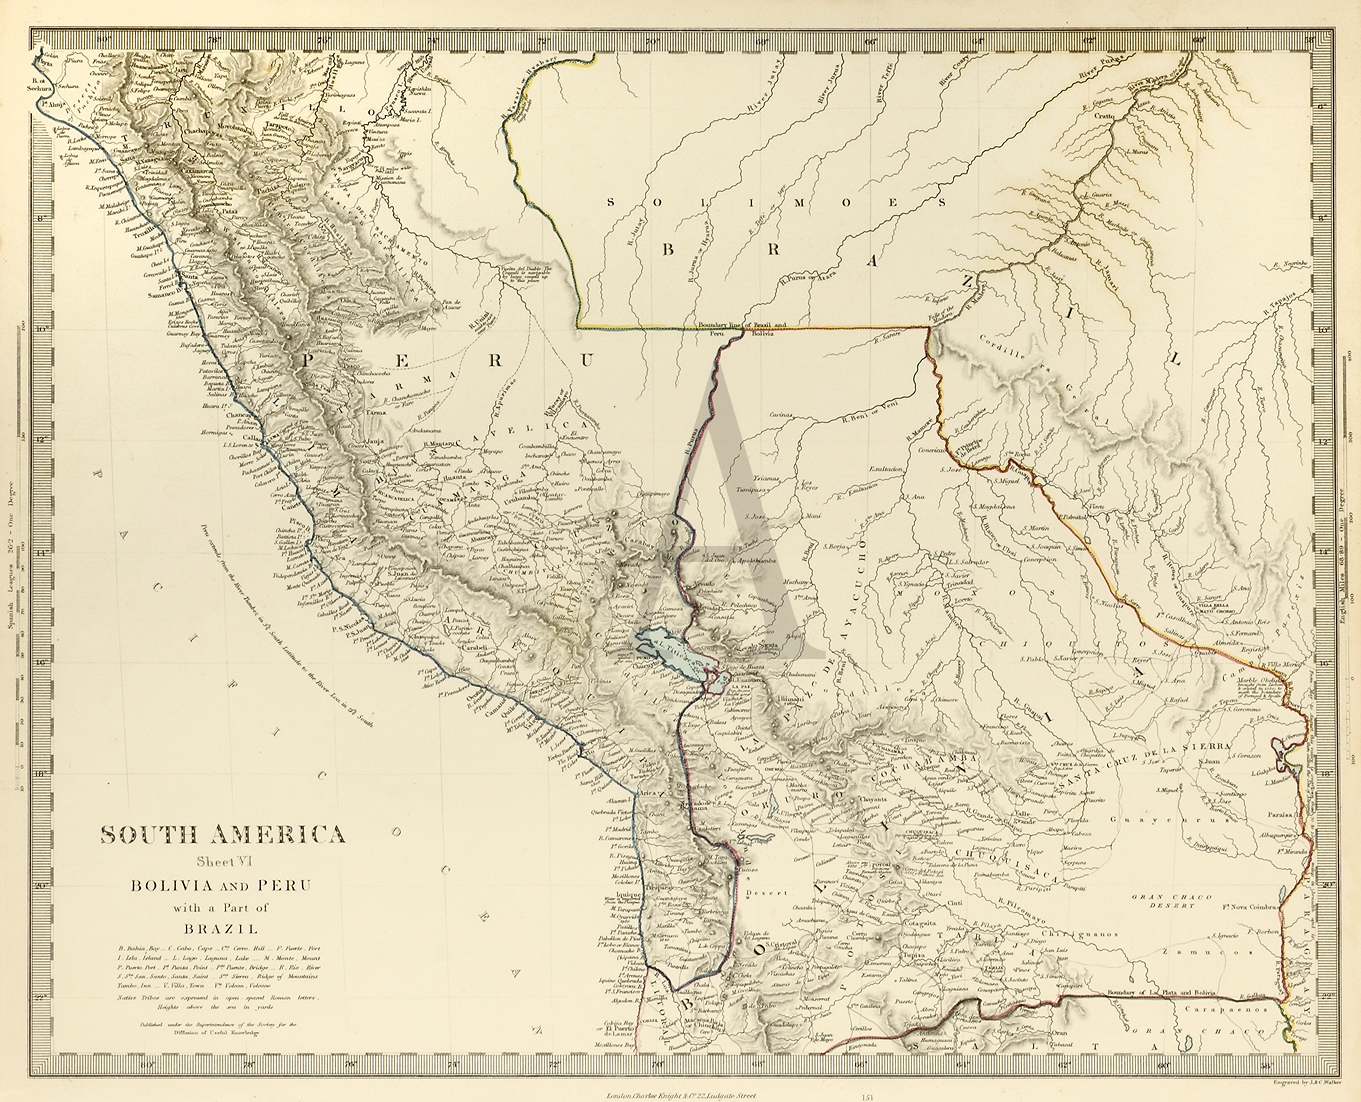 South America Sheet VI Bolivia and Peru - Antique Print from 1840